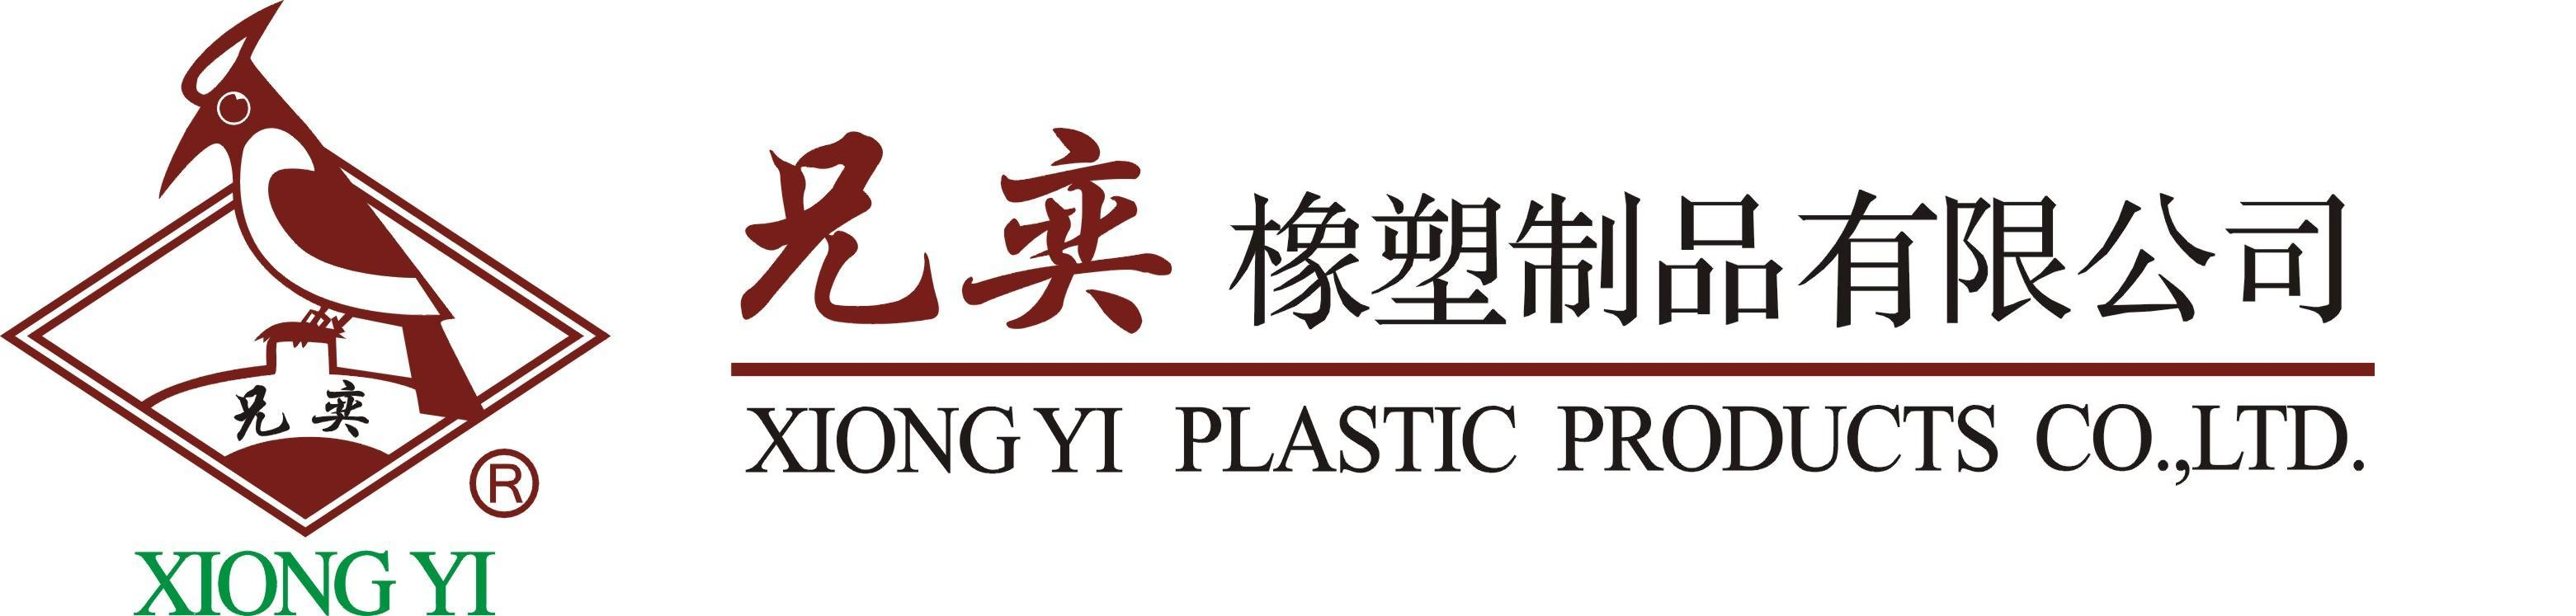 Shanghai Xiong Yi Plastic Products Co., Ltd.